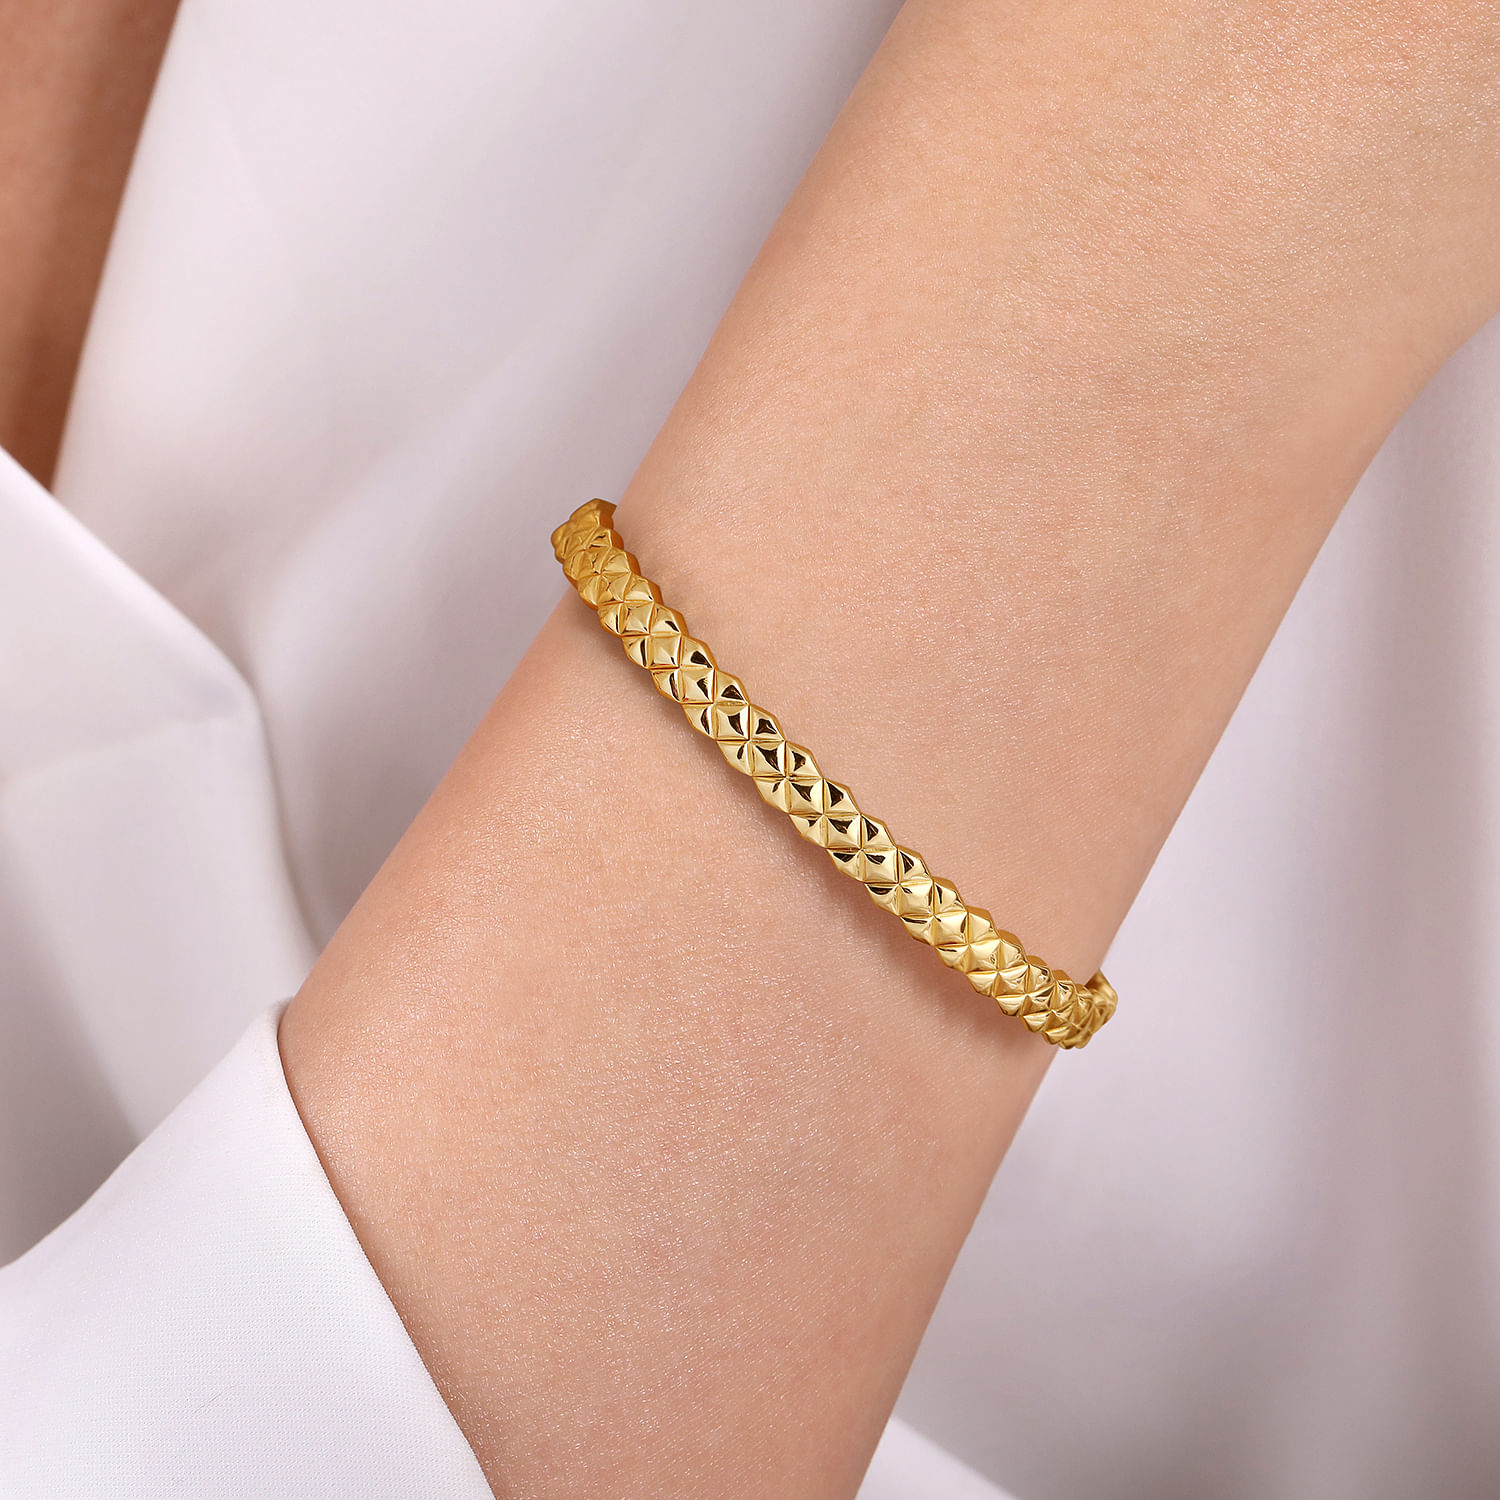 14K Yellow Gold Quilt Pattern Cuff Bracelet in size 6.5